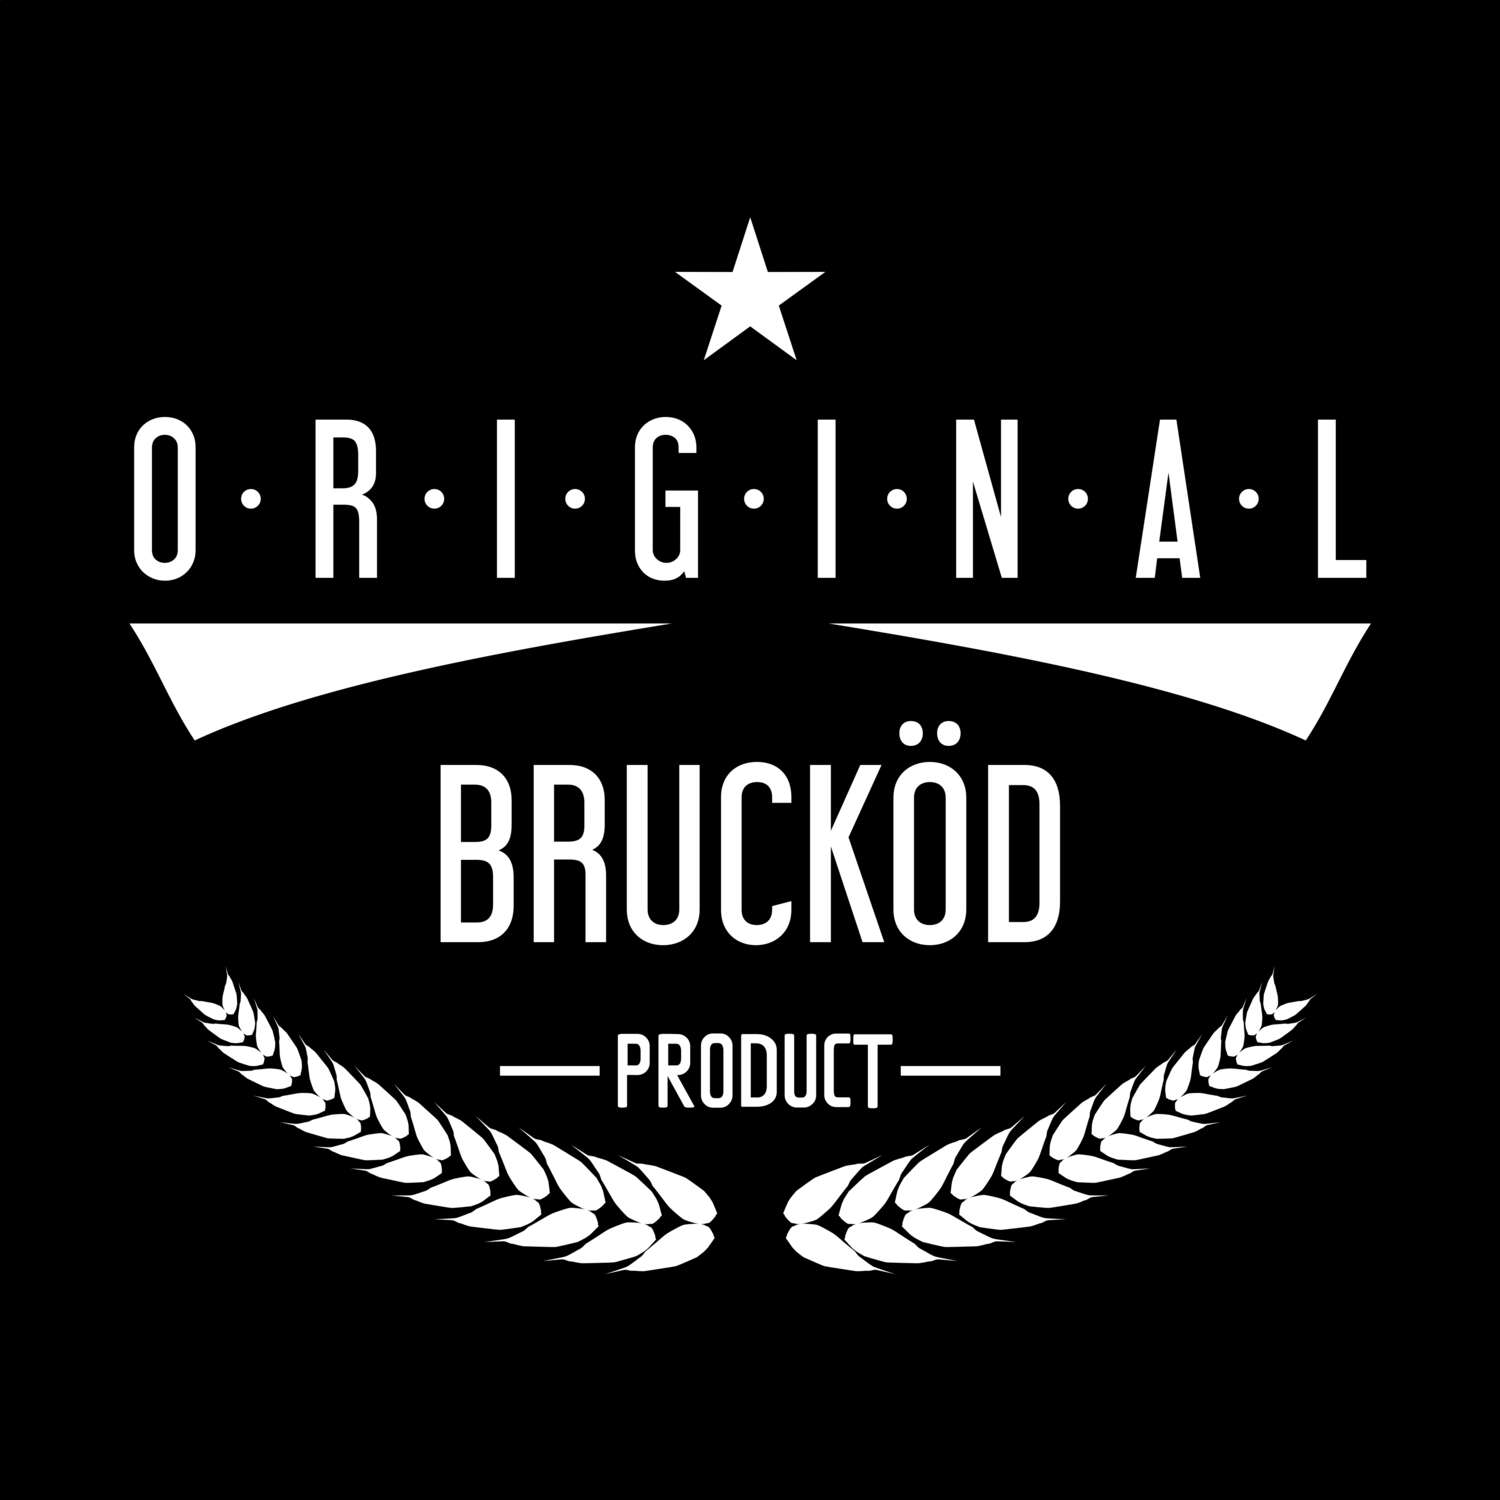 Brucköd T-Shirt »Original Product«